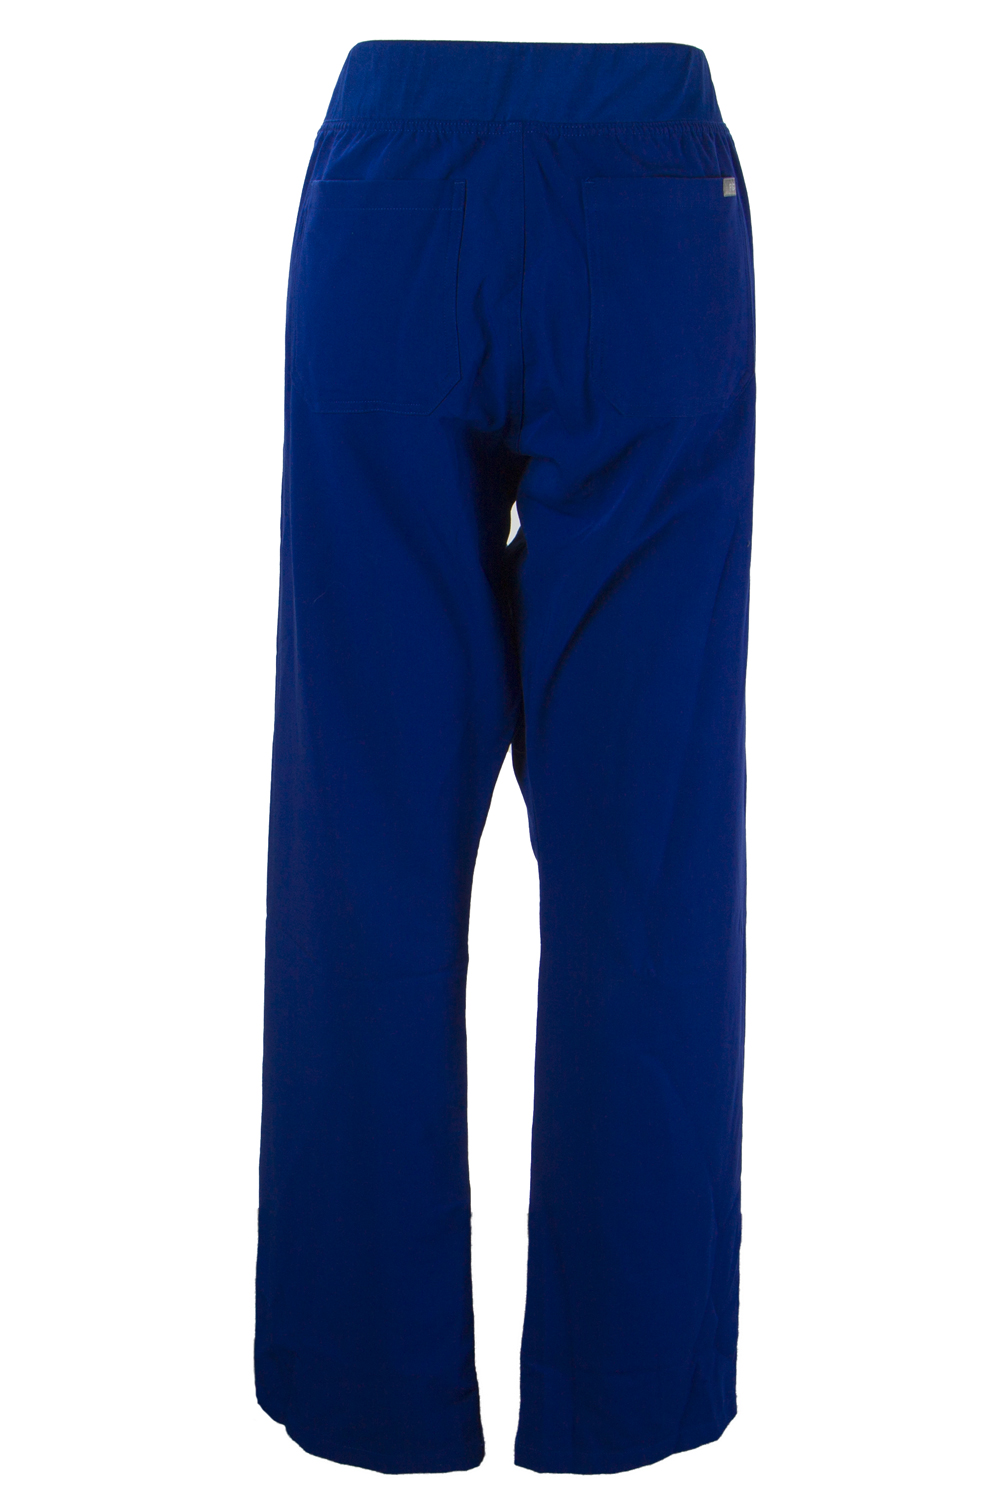 FIGS Women's Livingston Scrub Pants $46 NEW | eBay